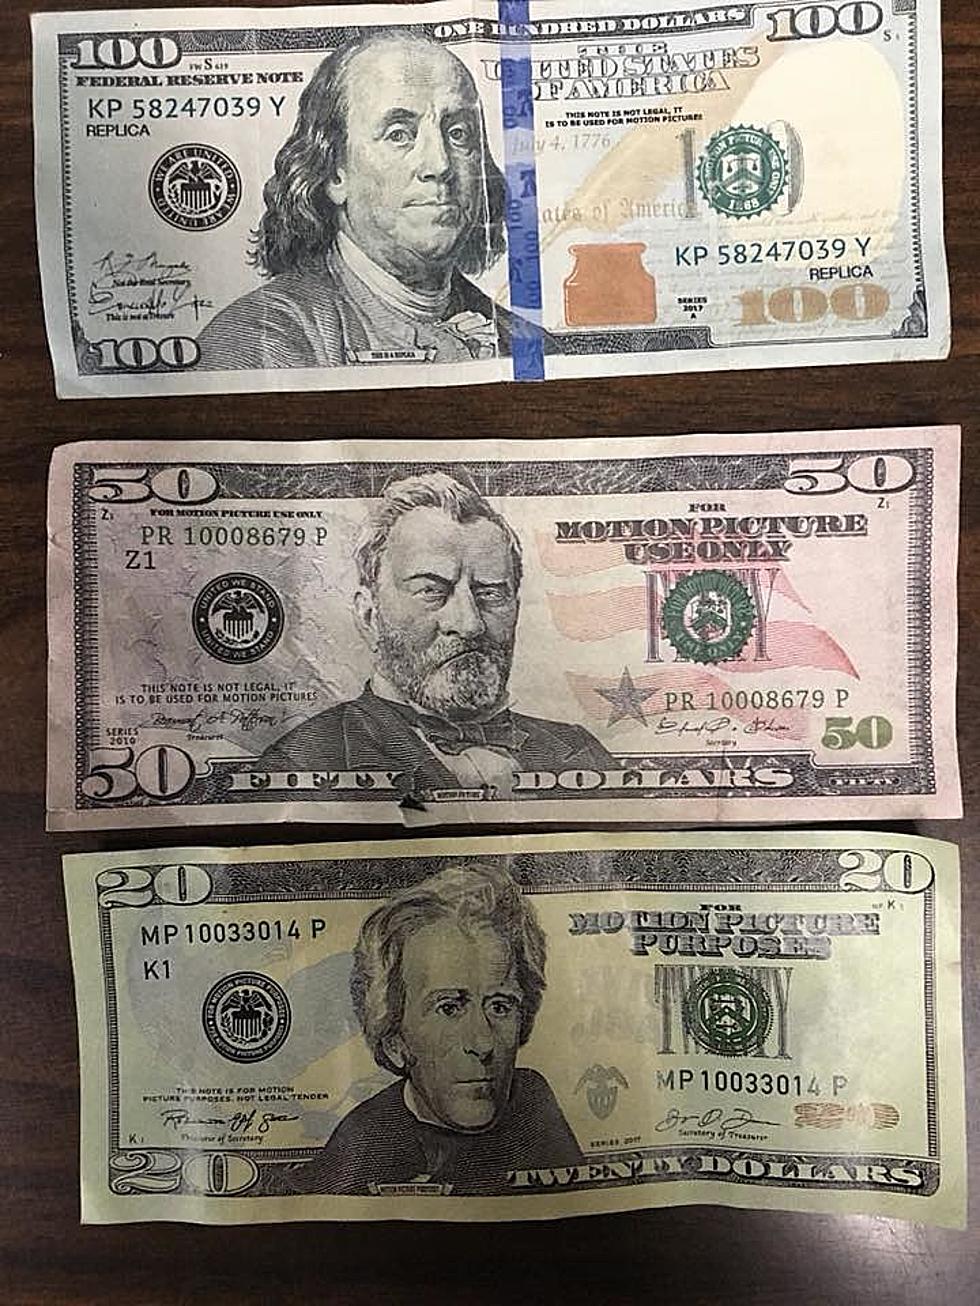 Counterfeit Bills Showing Up In Battle Creek